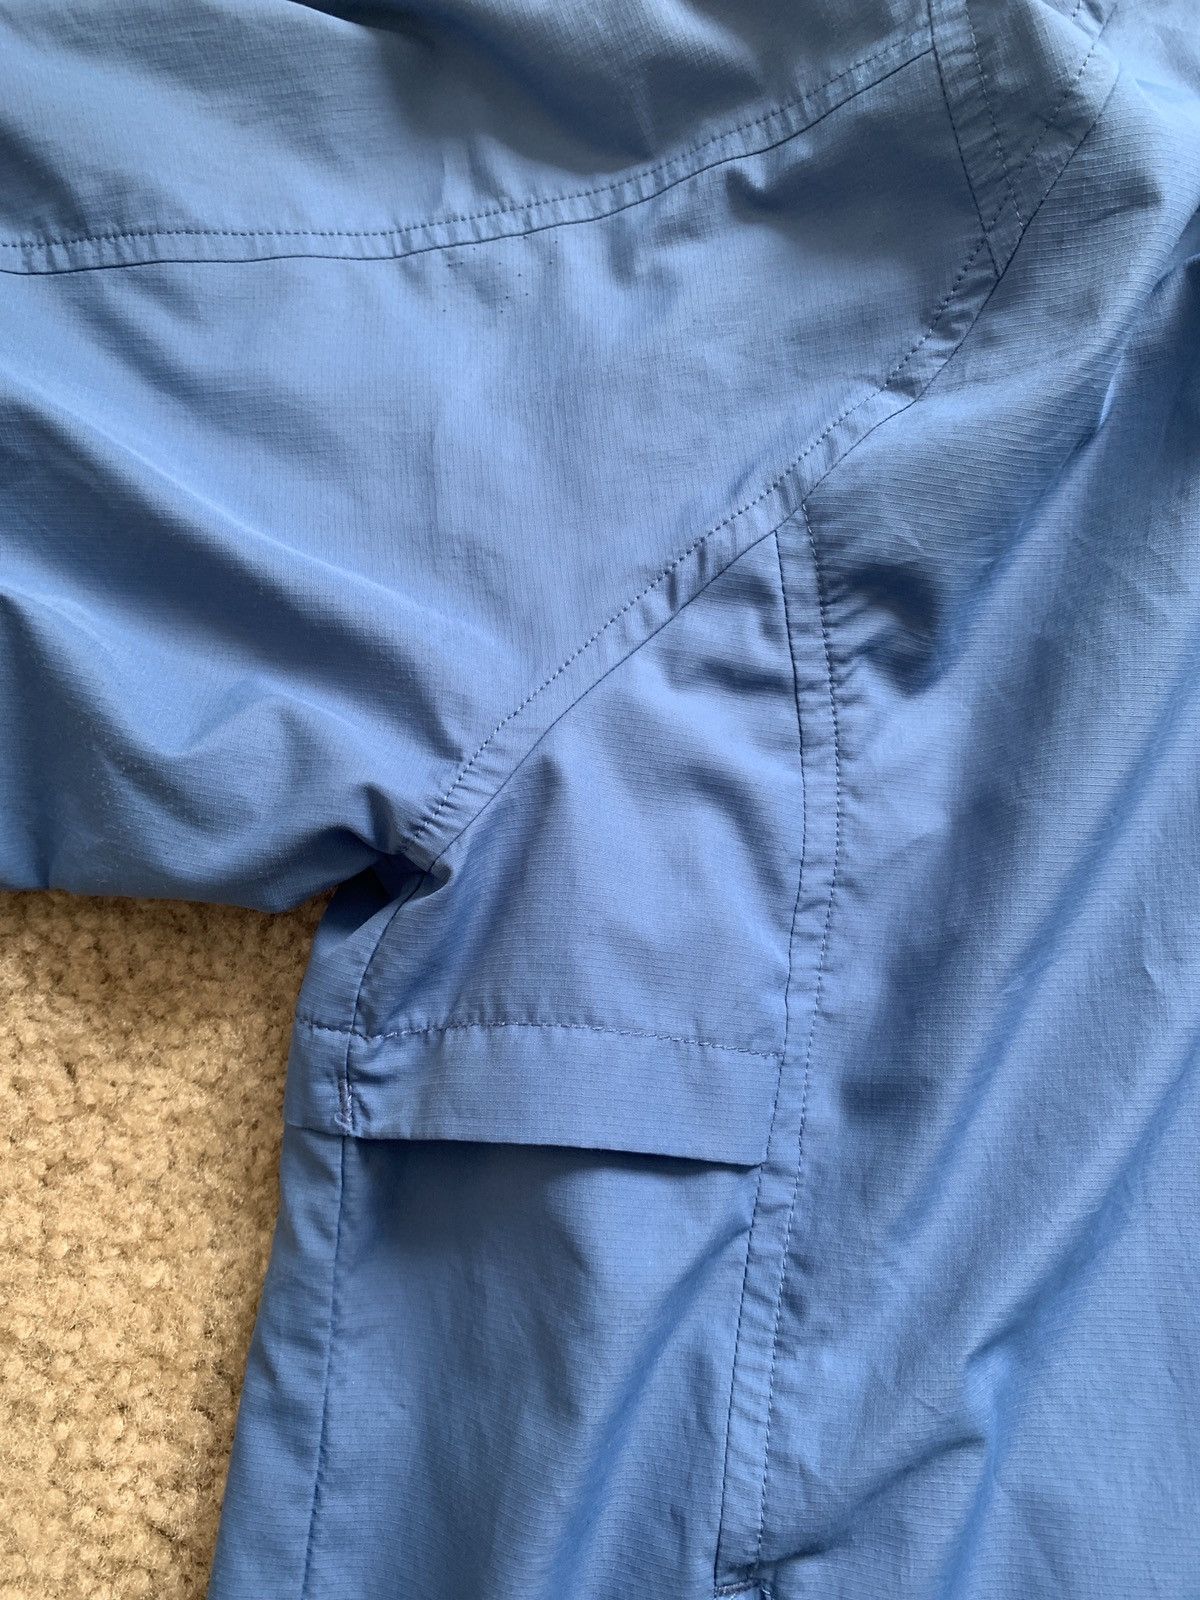 Rei Rei Raincoat Jacket (Blue) Size US S / EU 44-46 / 1 - 7 Thumbnail